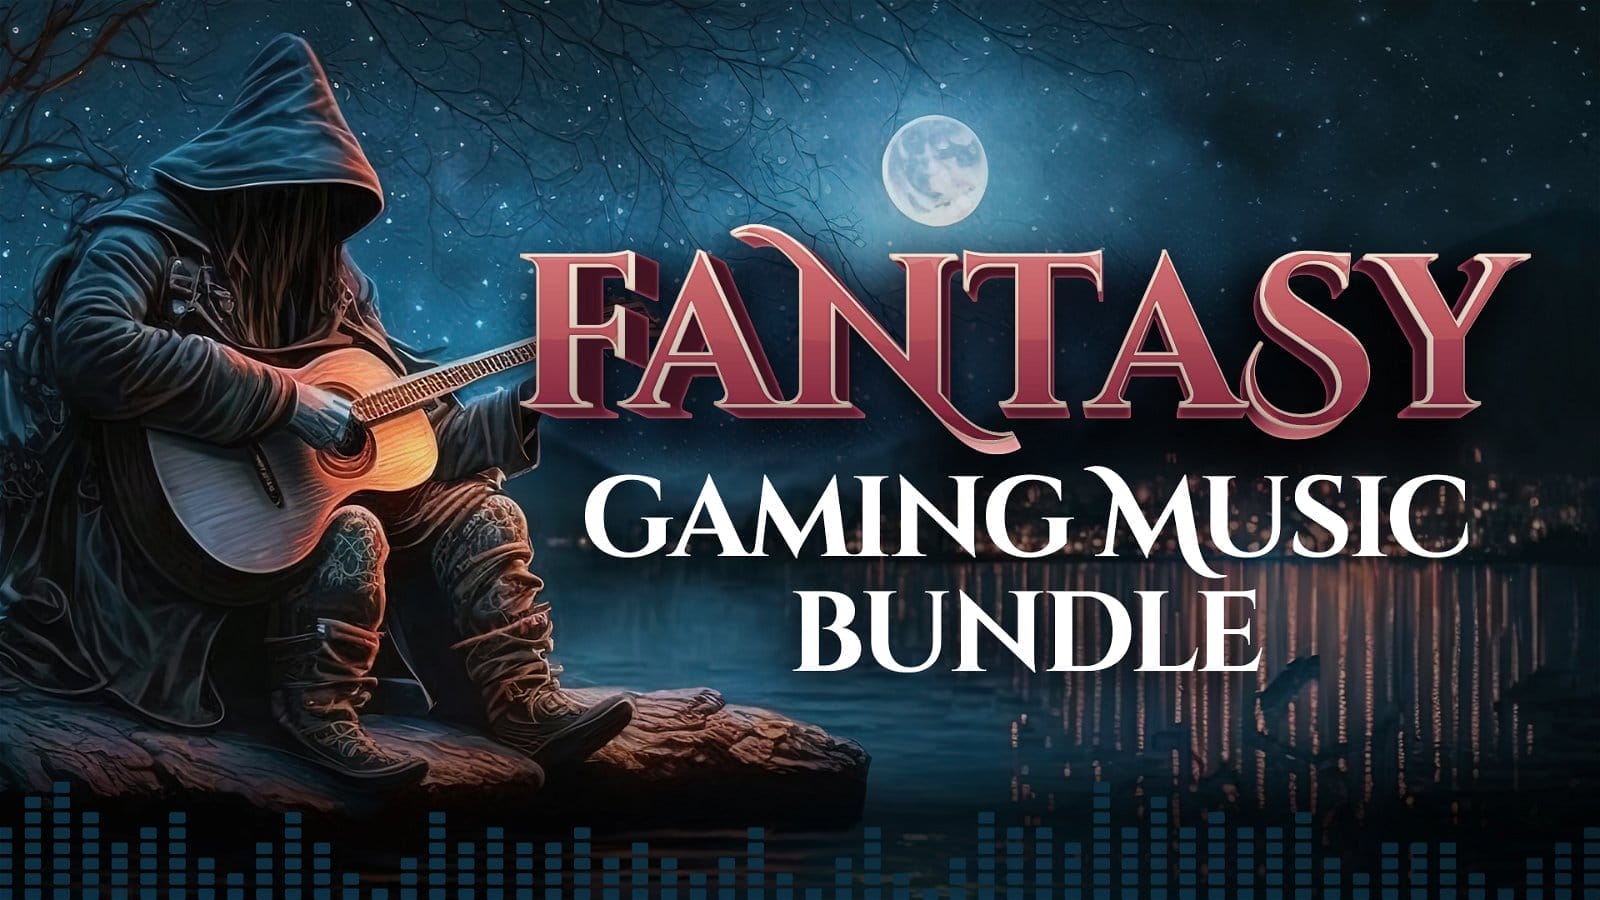 Fantacy Gaming Music Bundle